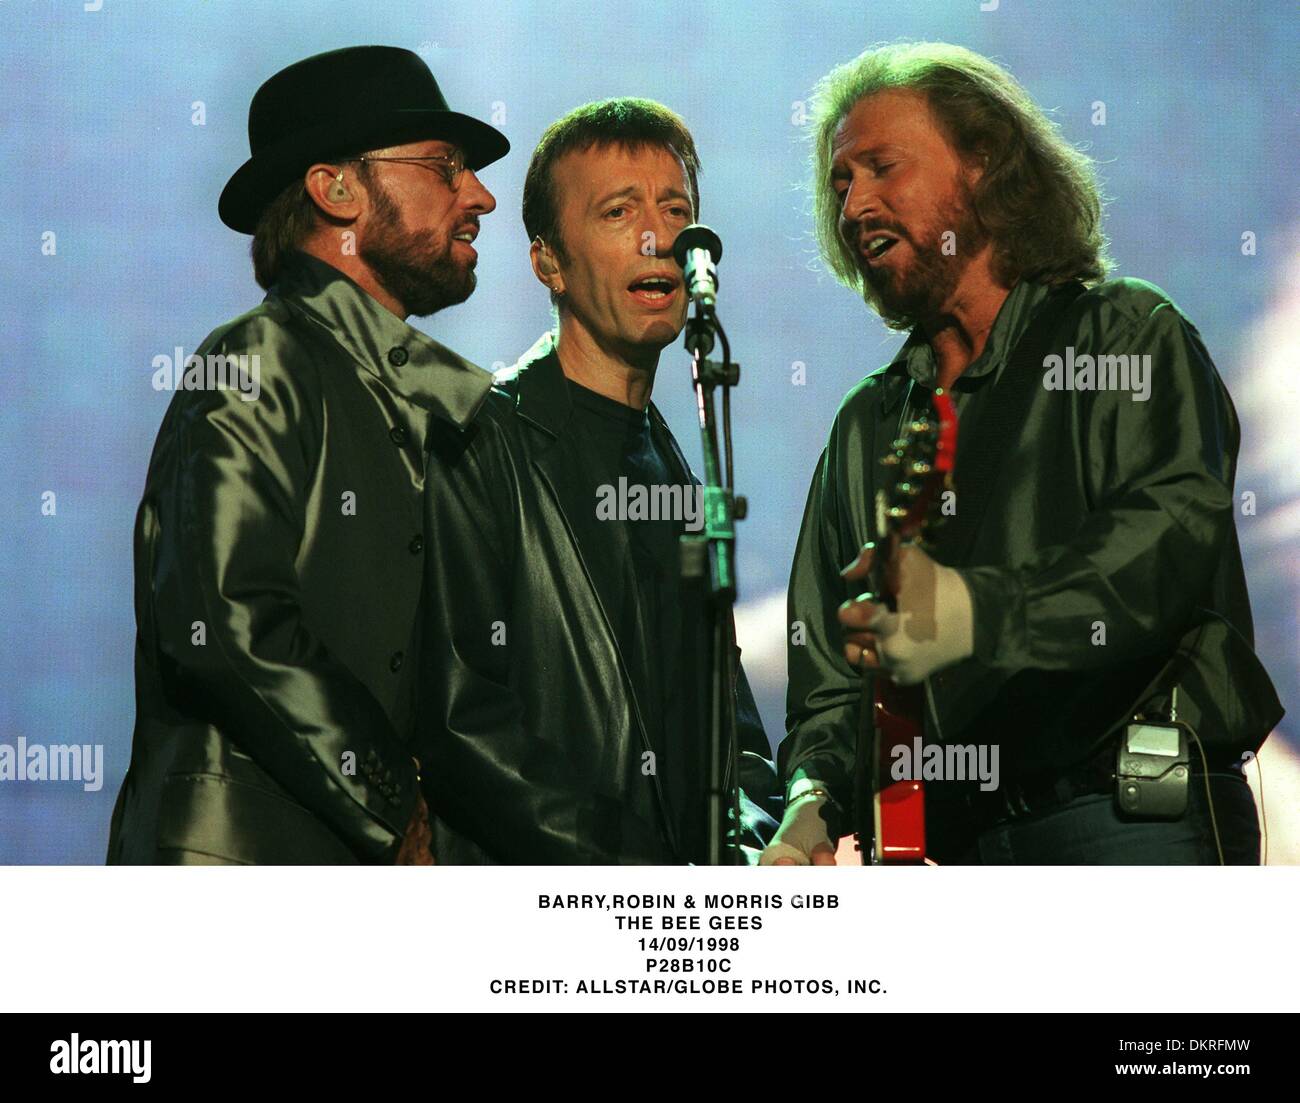 BARRY,ROBIN & MORRIS GIBB.I Bee Gees.14/09/1998.P28B10C. Foto Stock